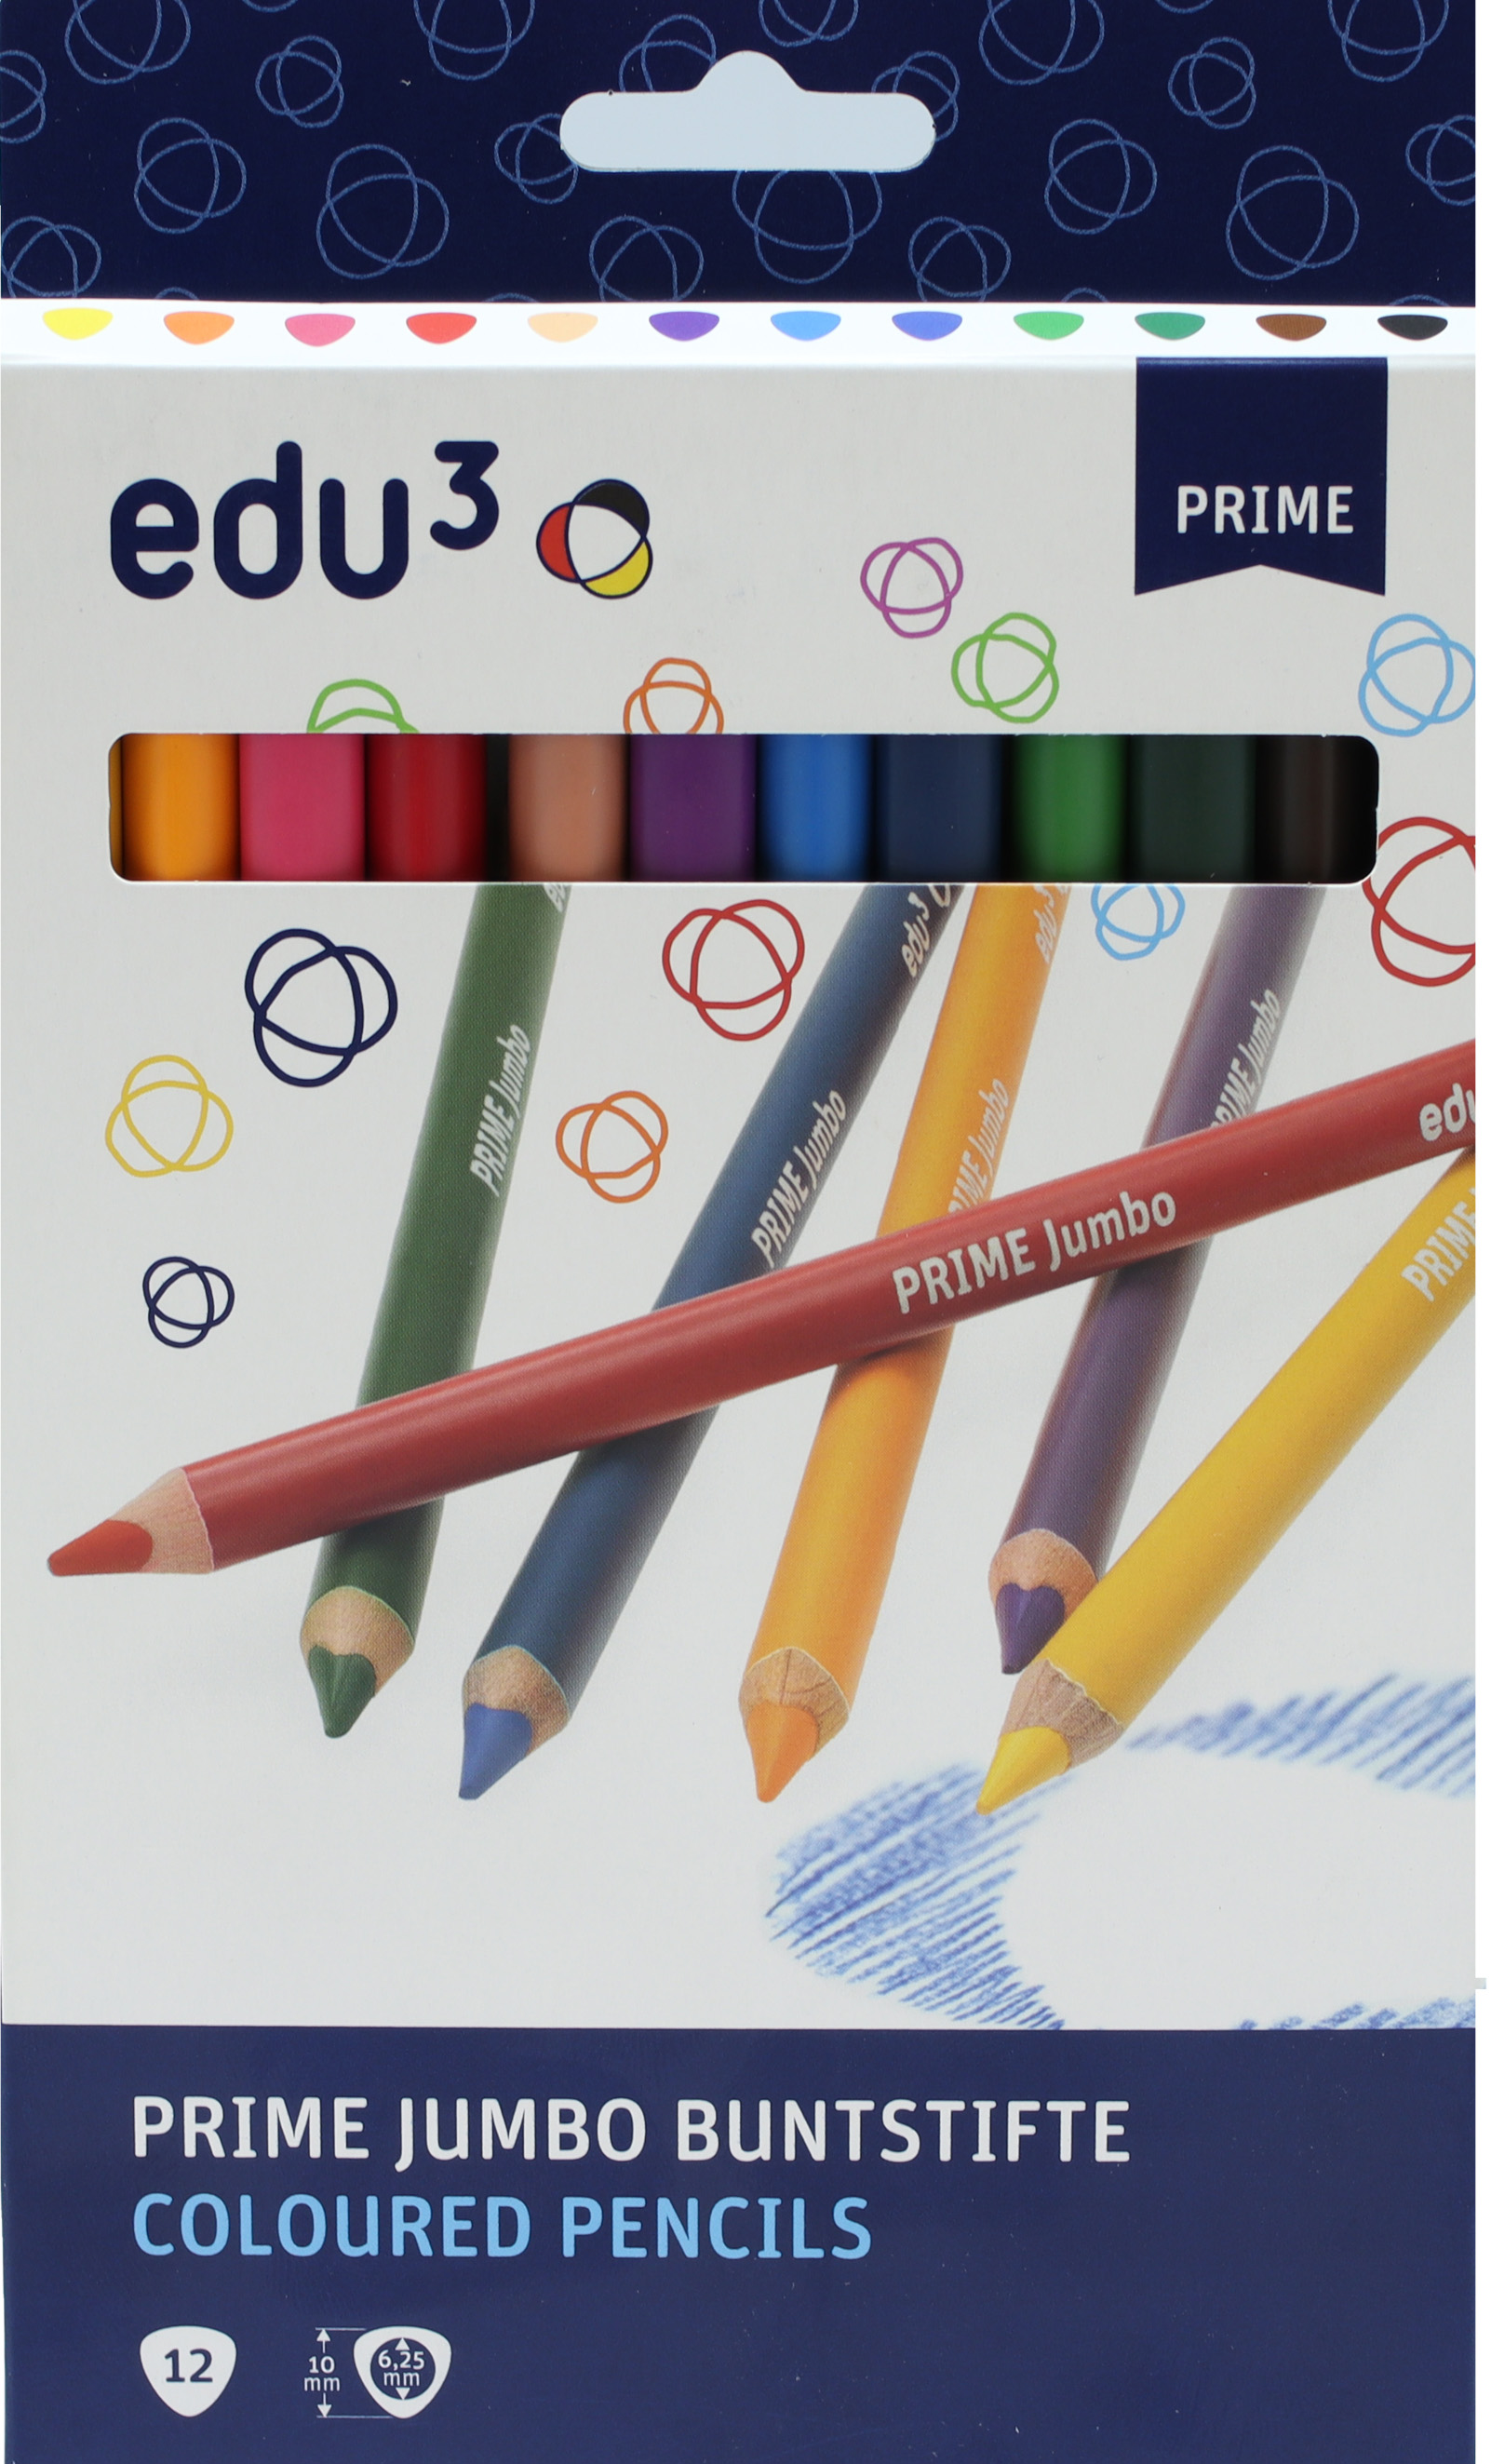 edu³ PRIME Jumbo colored pencils tri Set